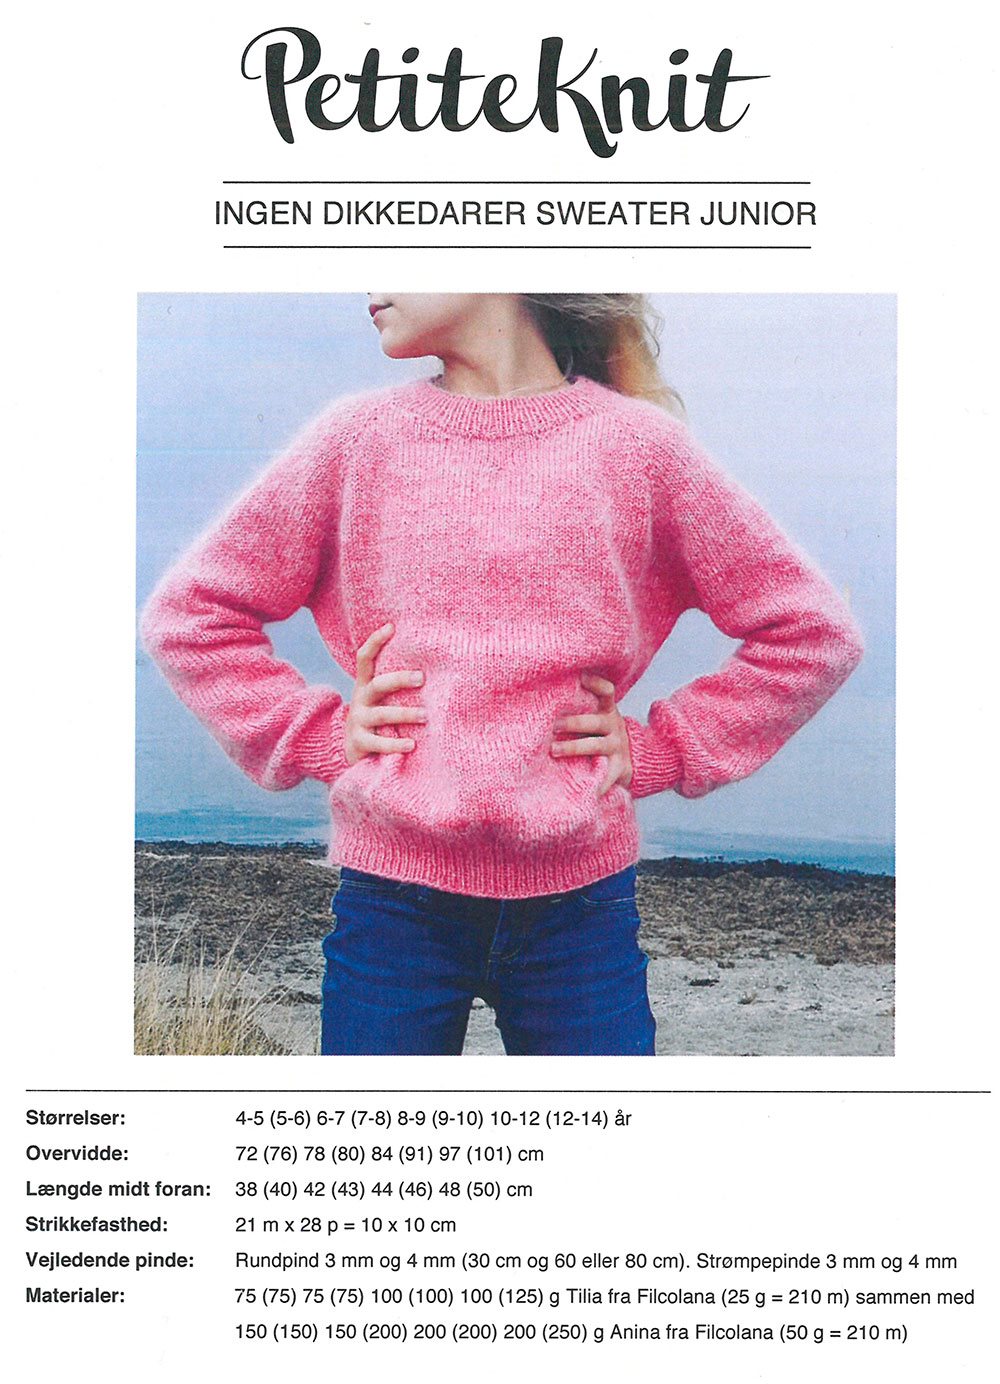 Dikkedarer sweater junior